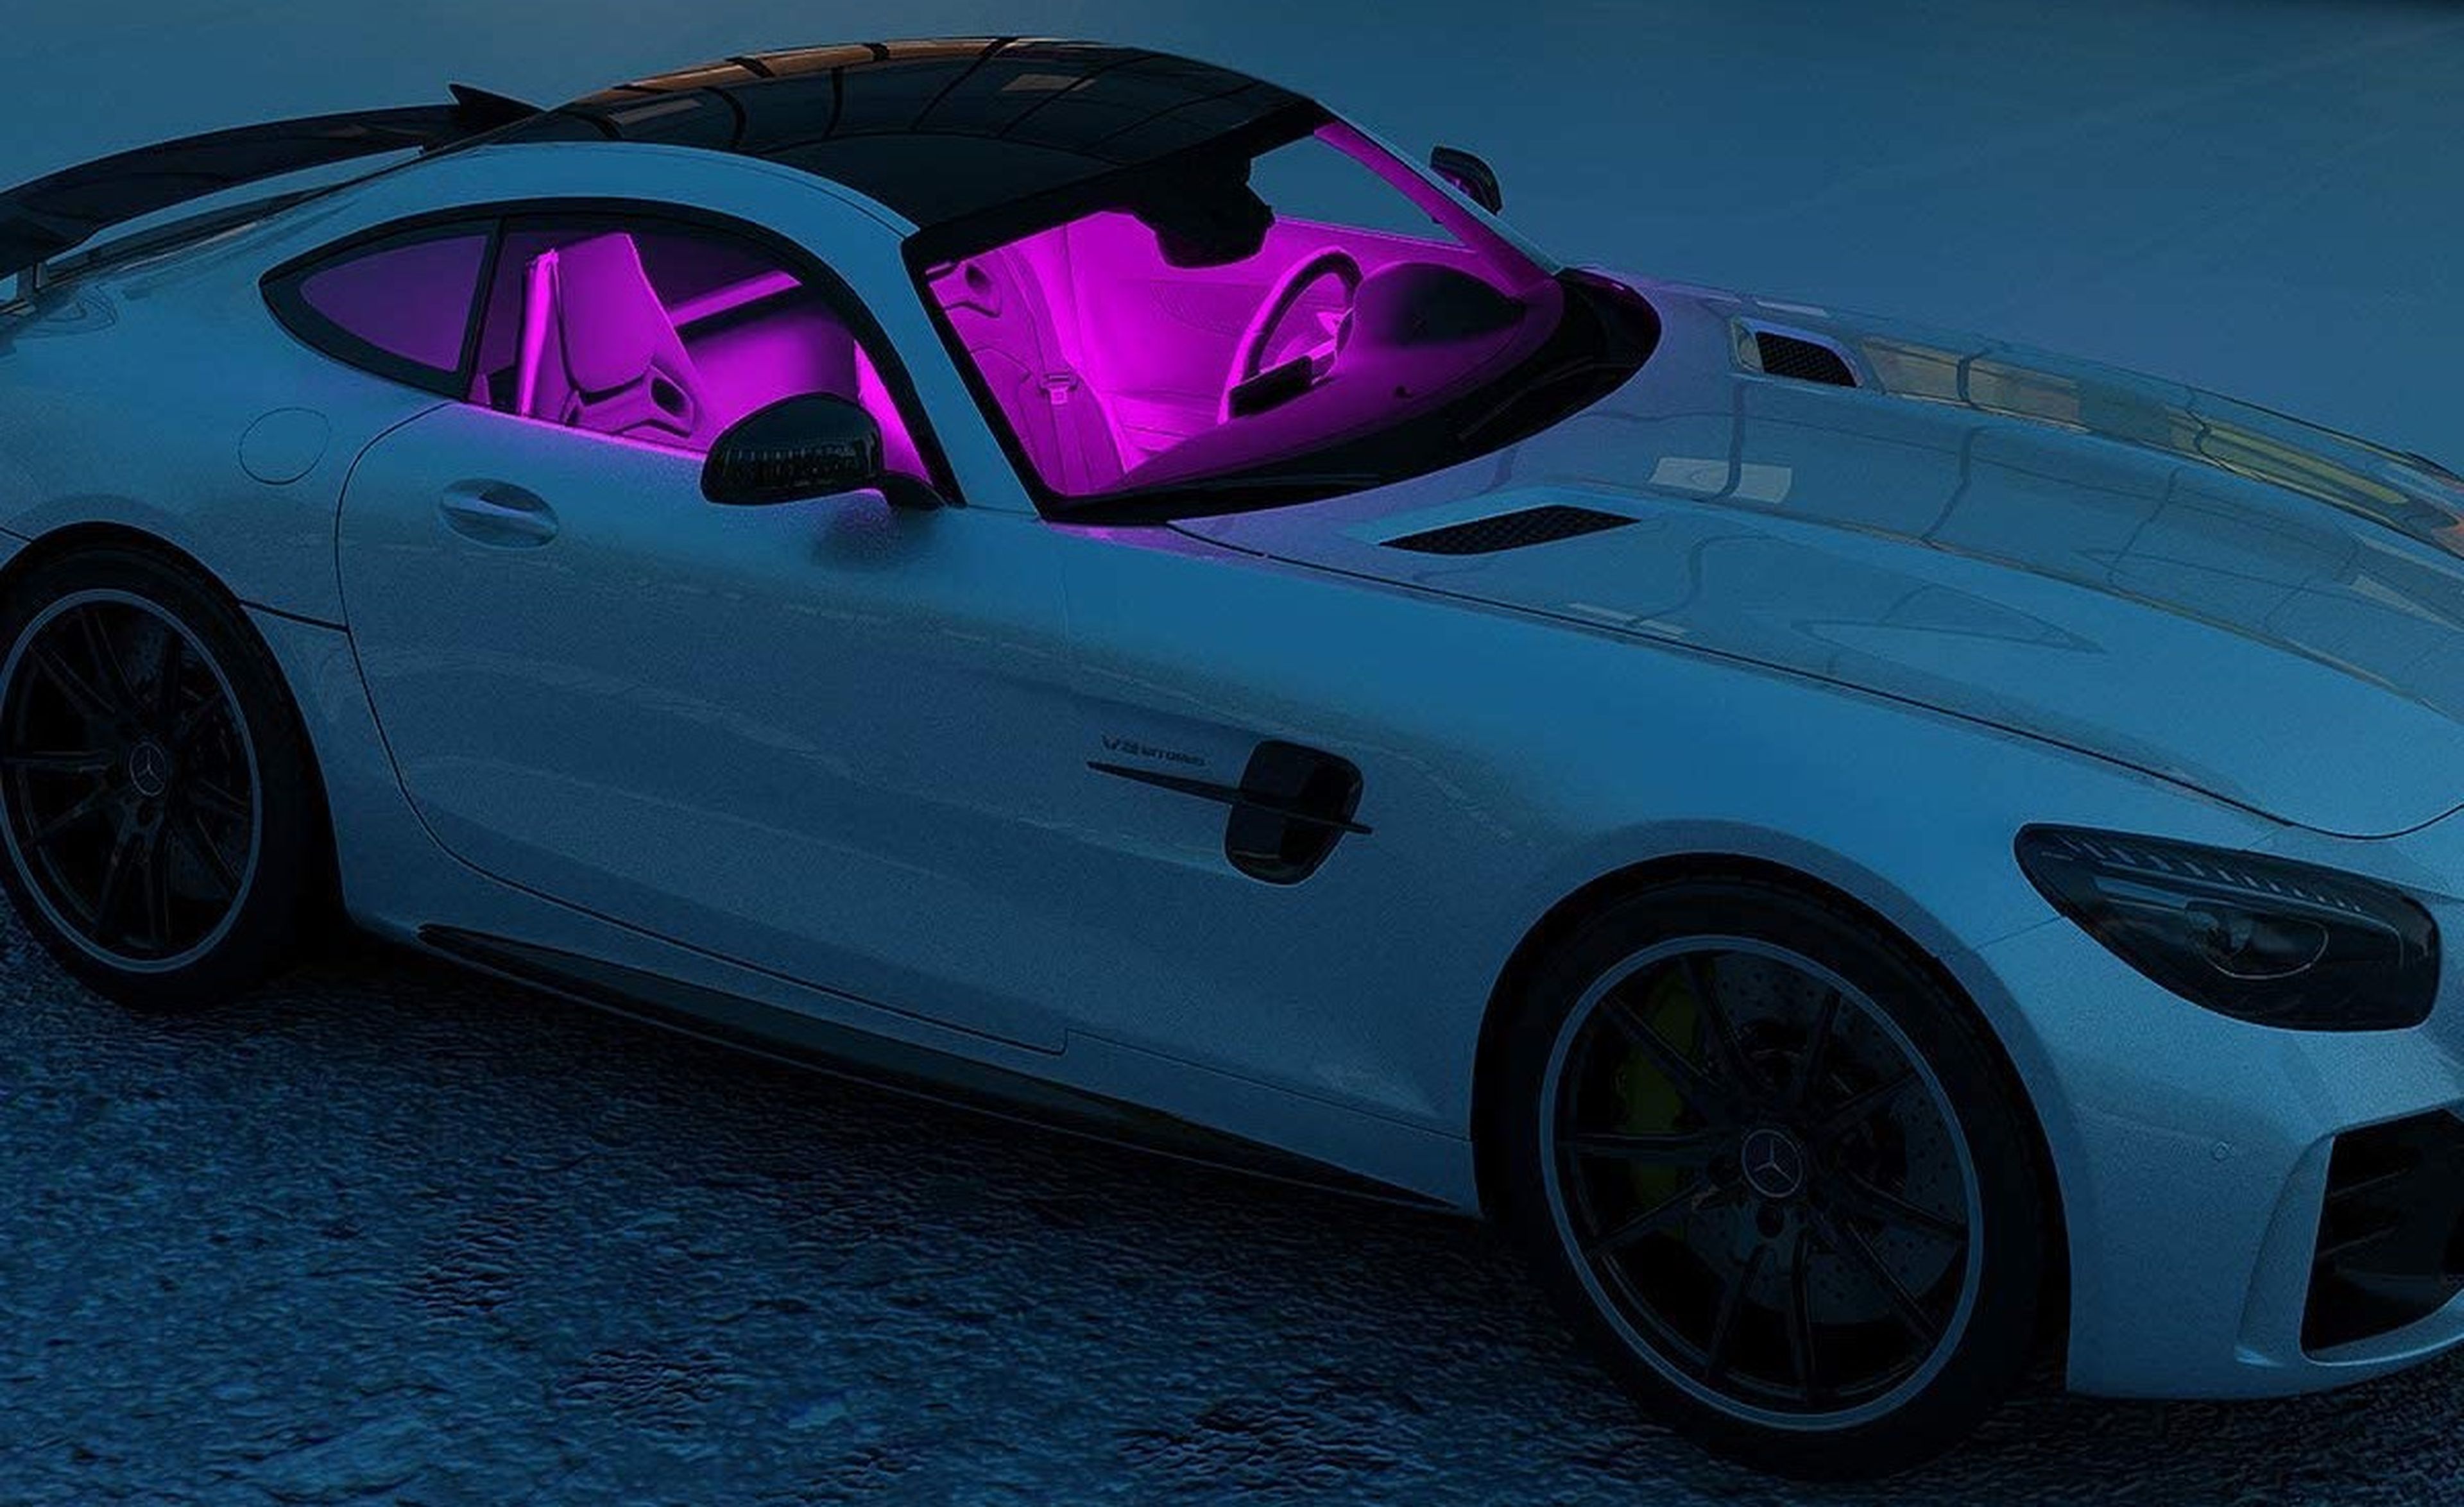 Ilumina el interior de tu coche con este kit de luces LED RGB por